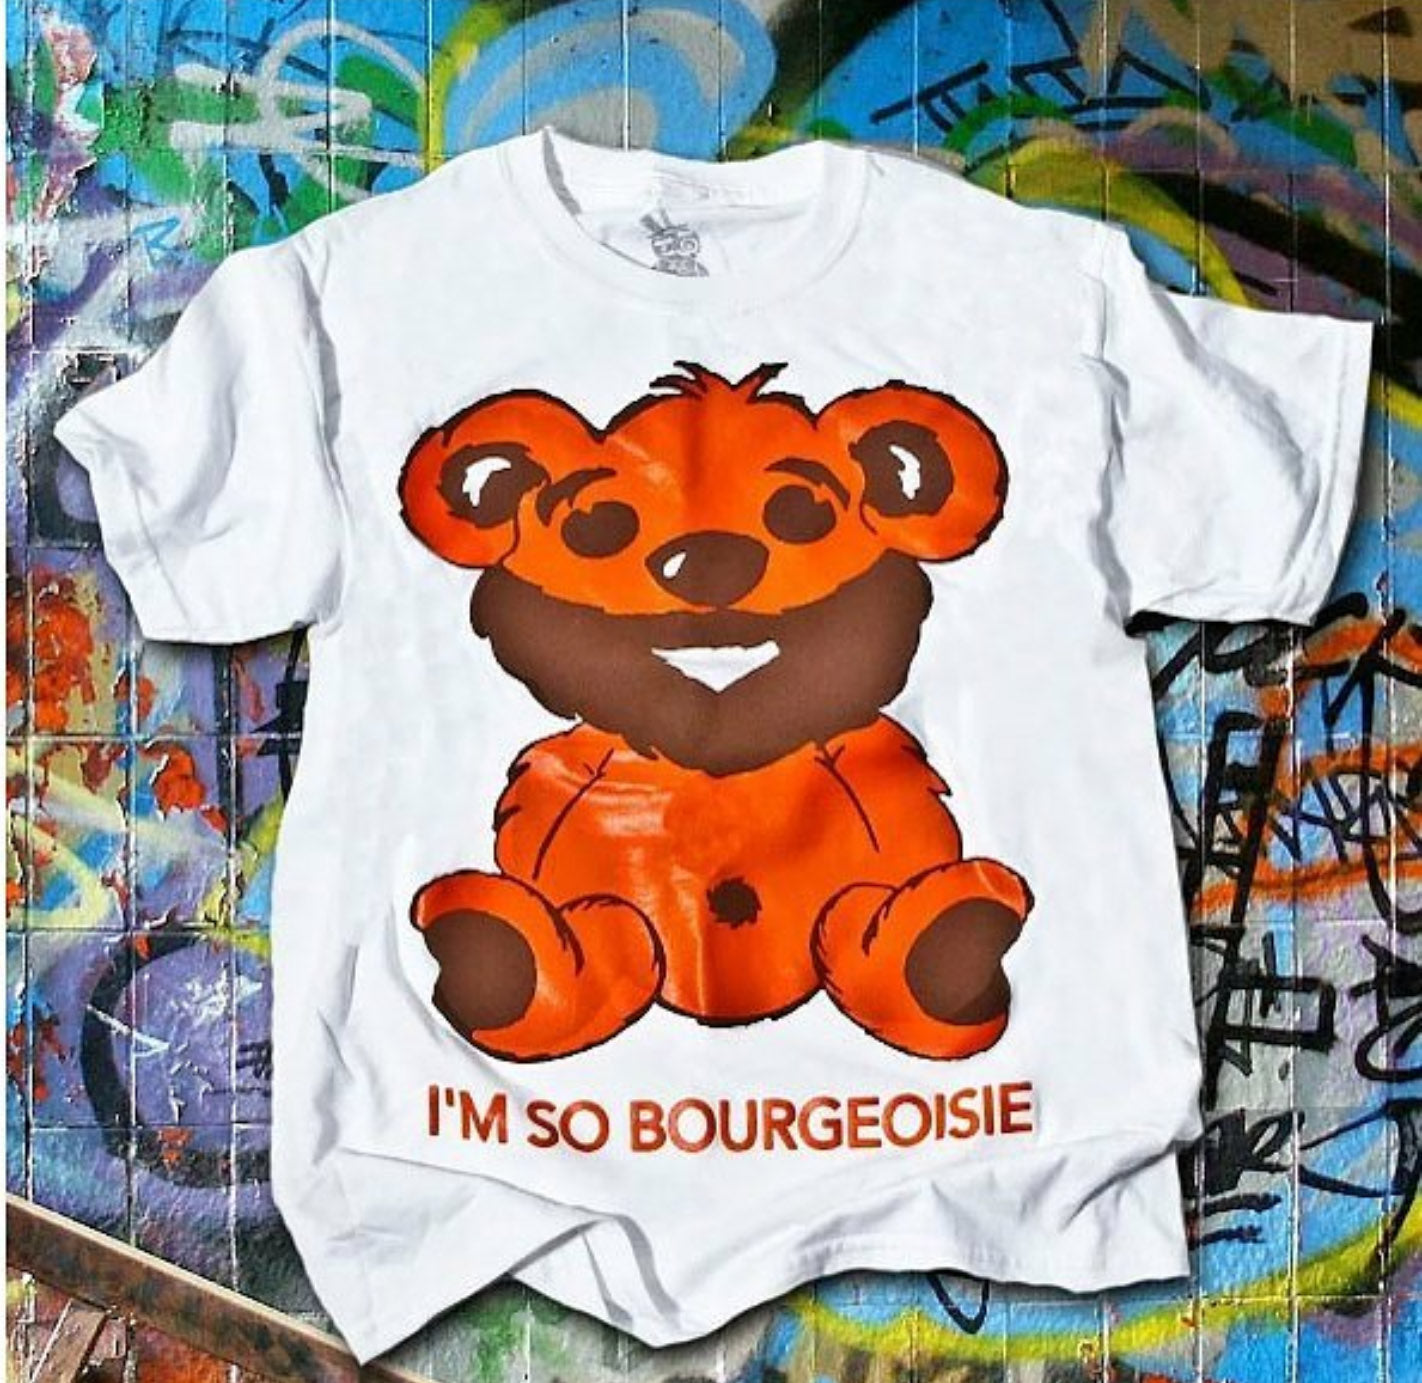 "I'M SO BOURGEOIS" T-SHIRT